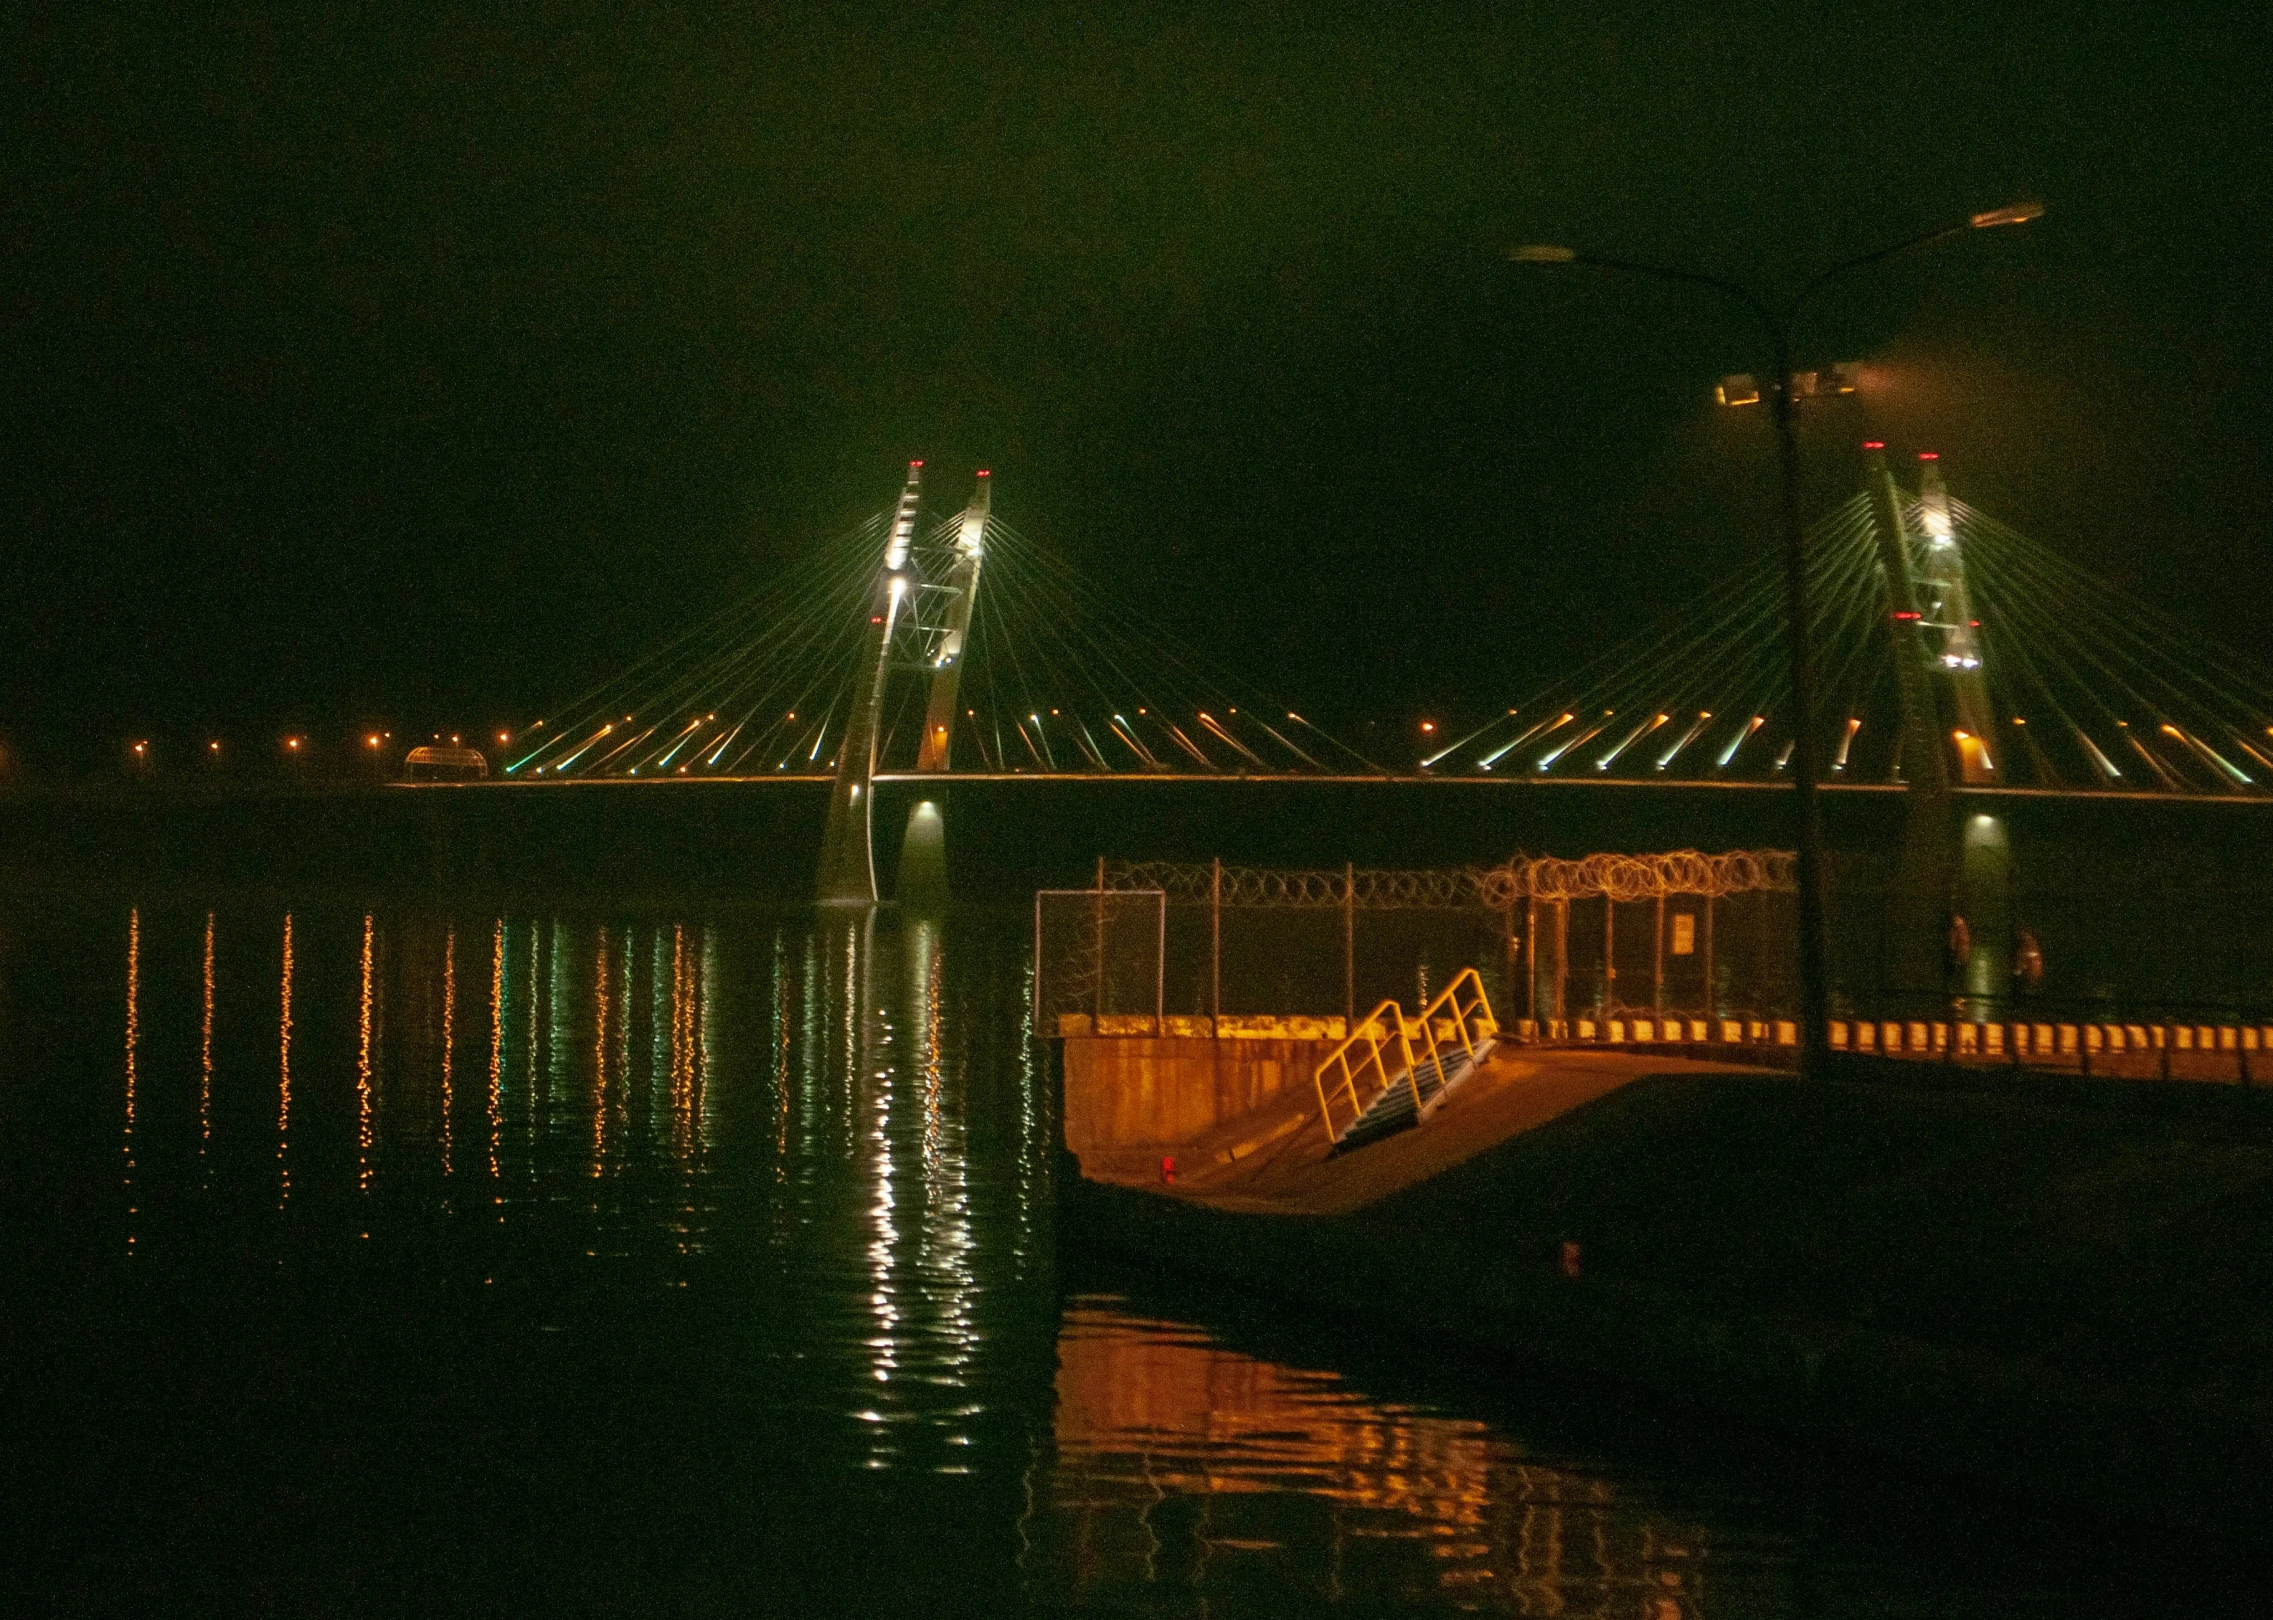 a long exposure po of a bridge at night